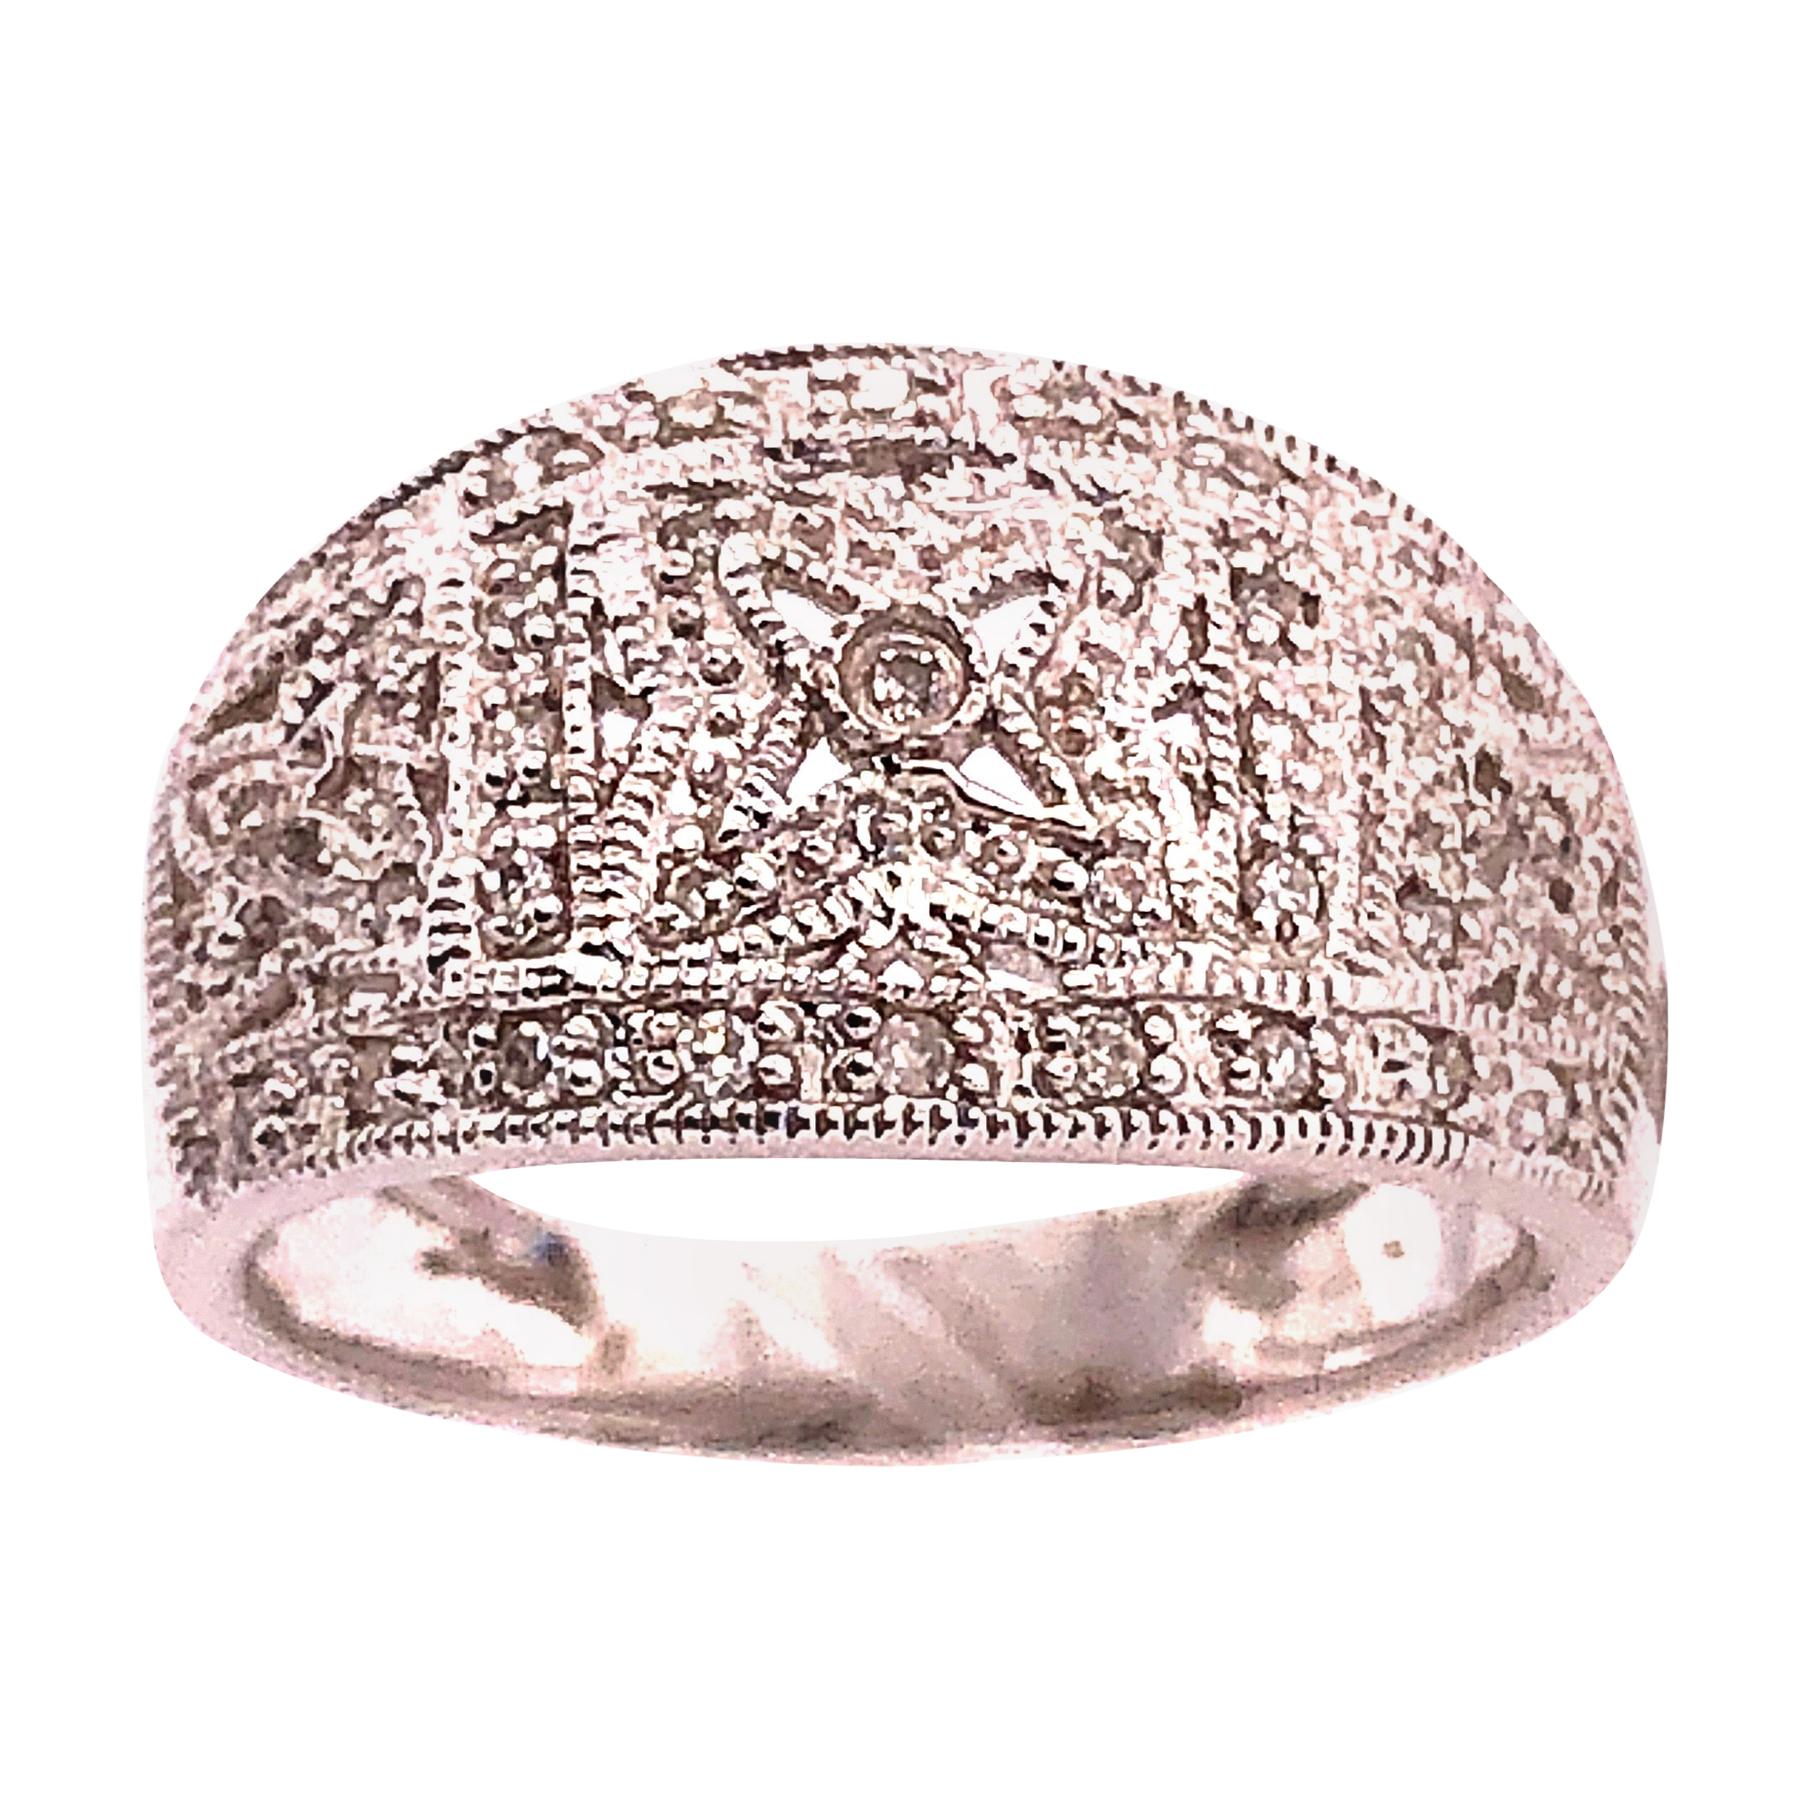 14 Karat White Gold Fashion Ring with Round Diamonds